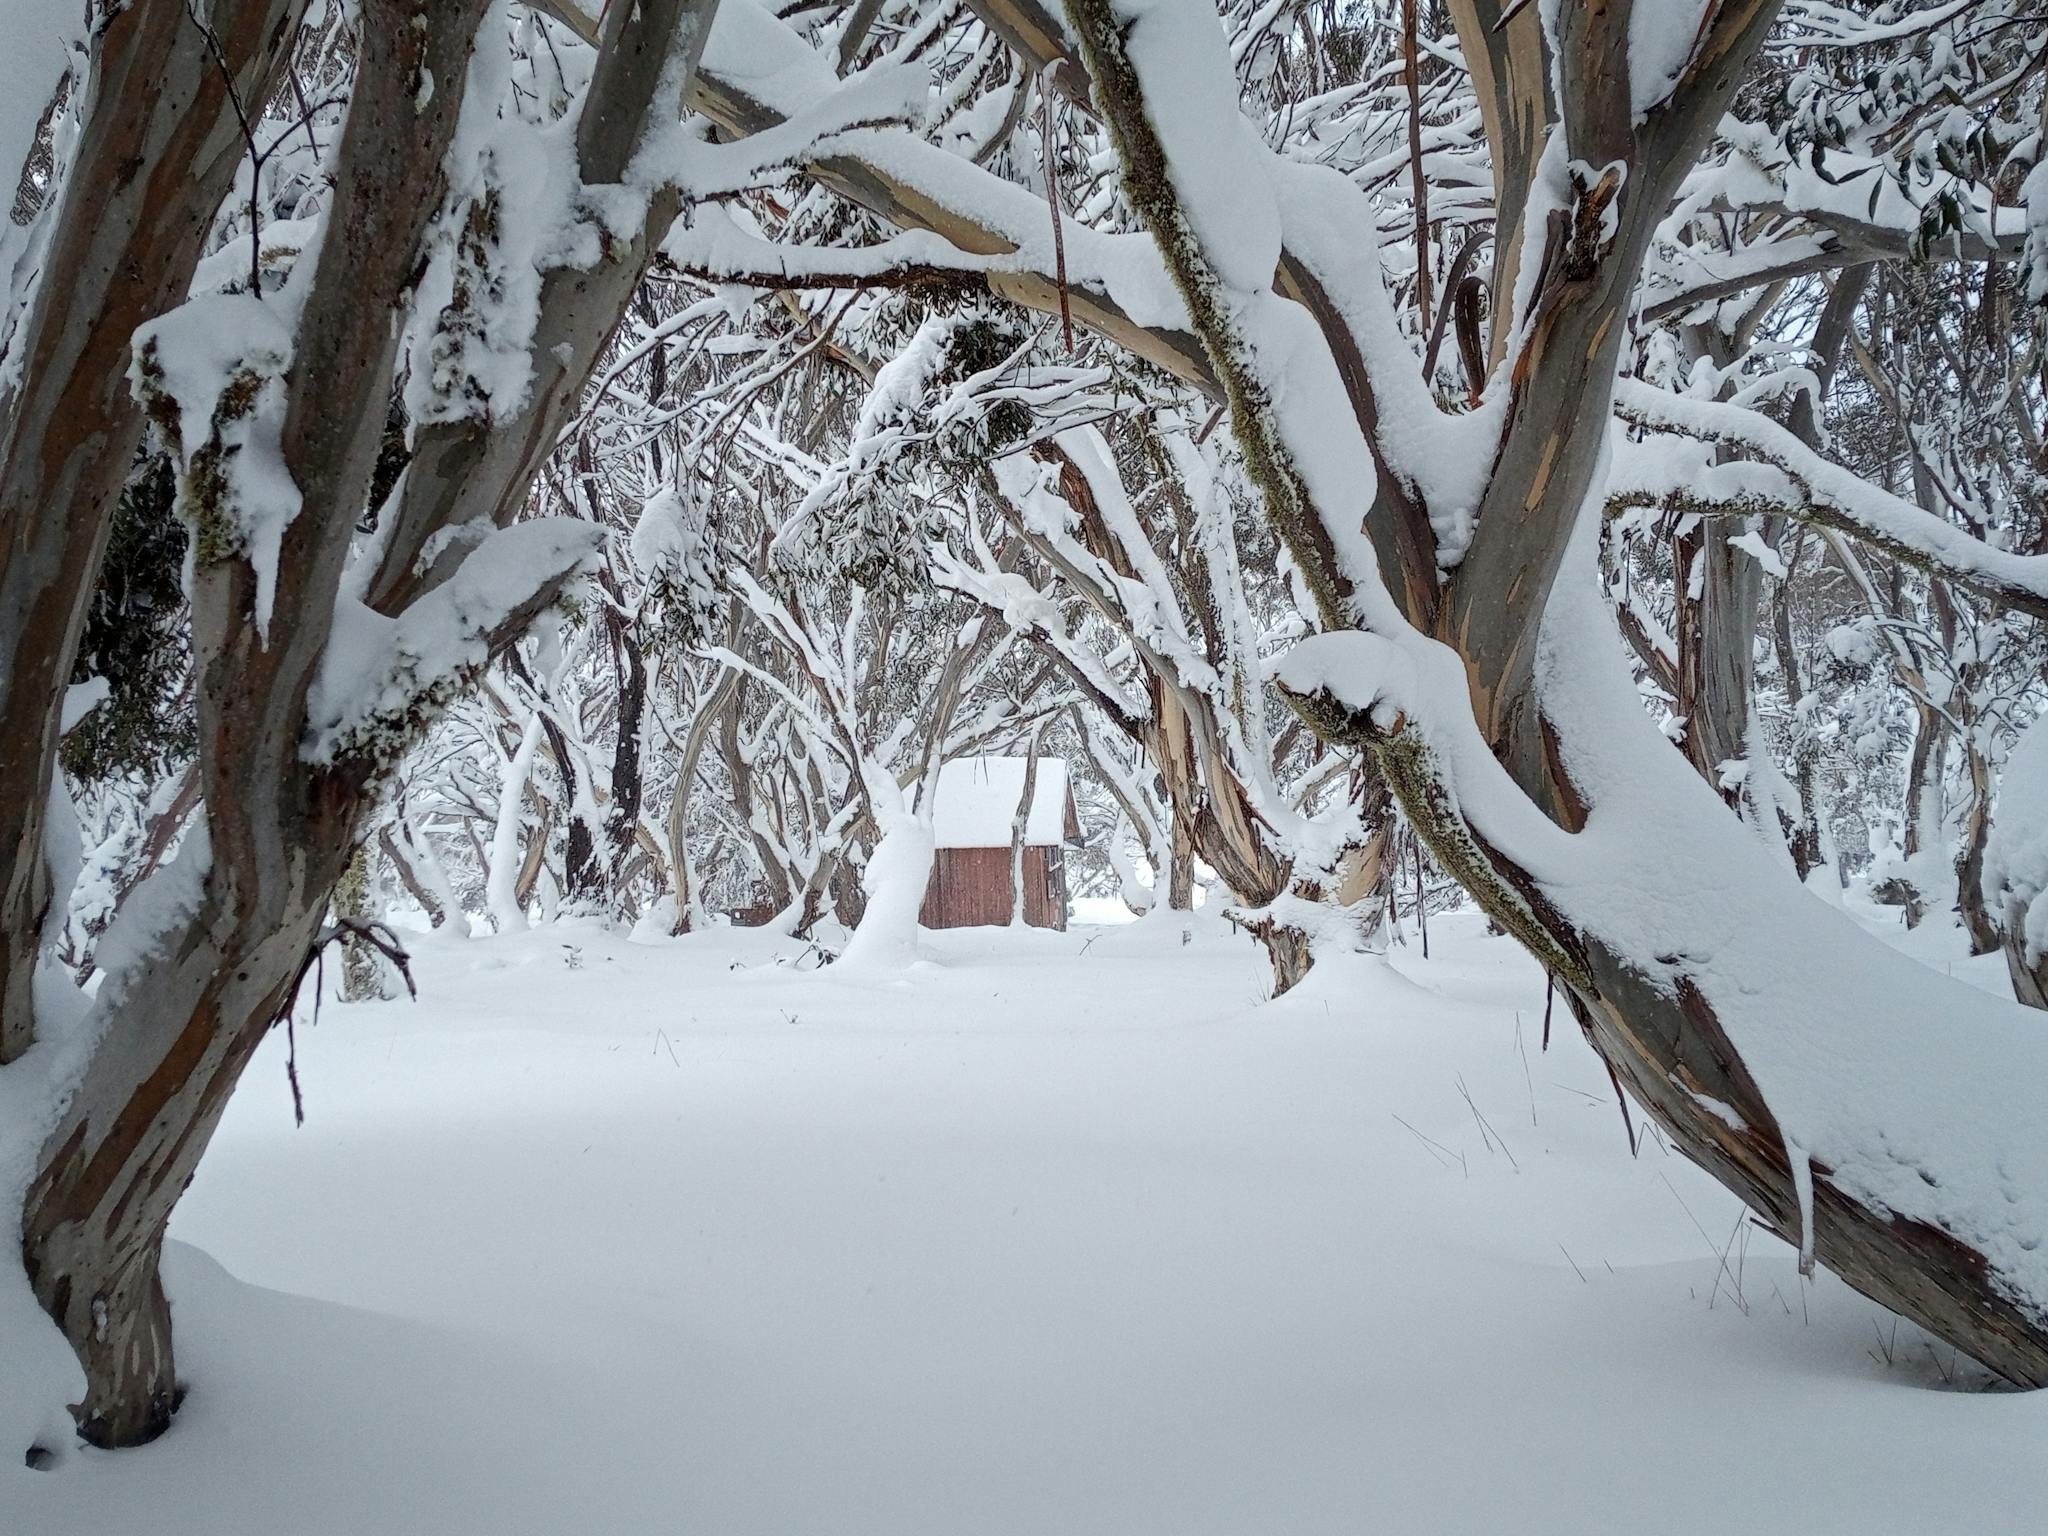 Hut amongst the snowgums